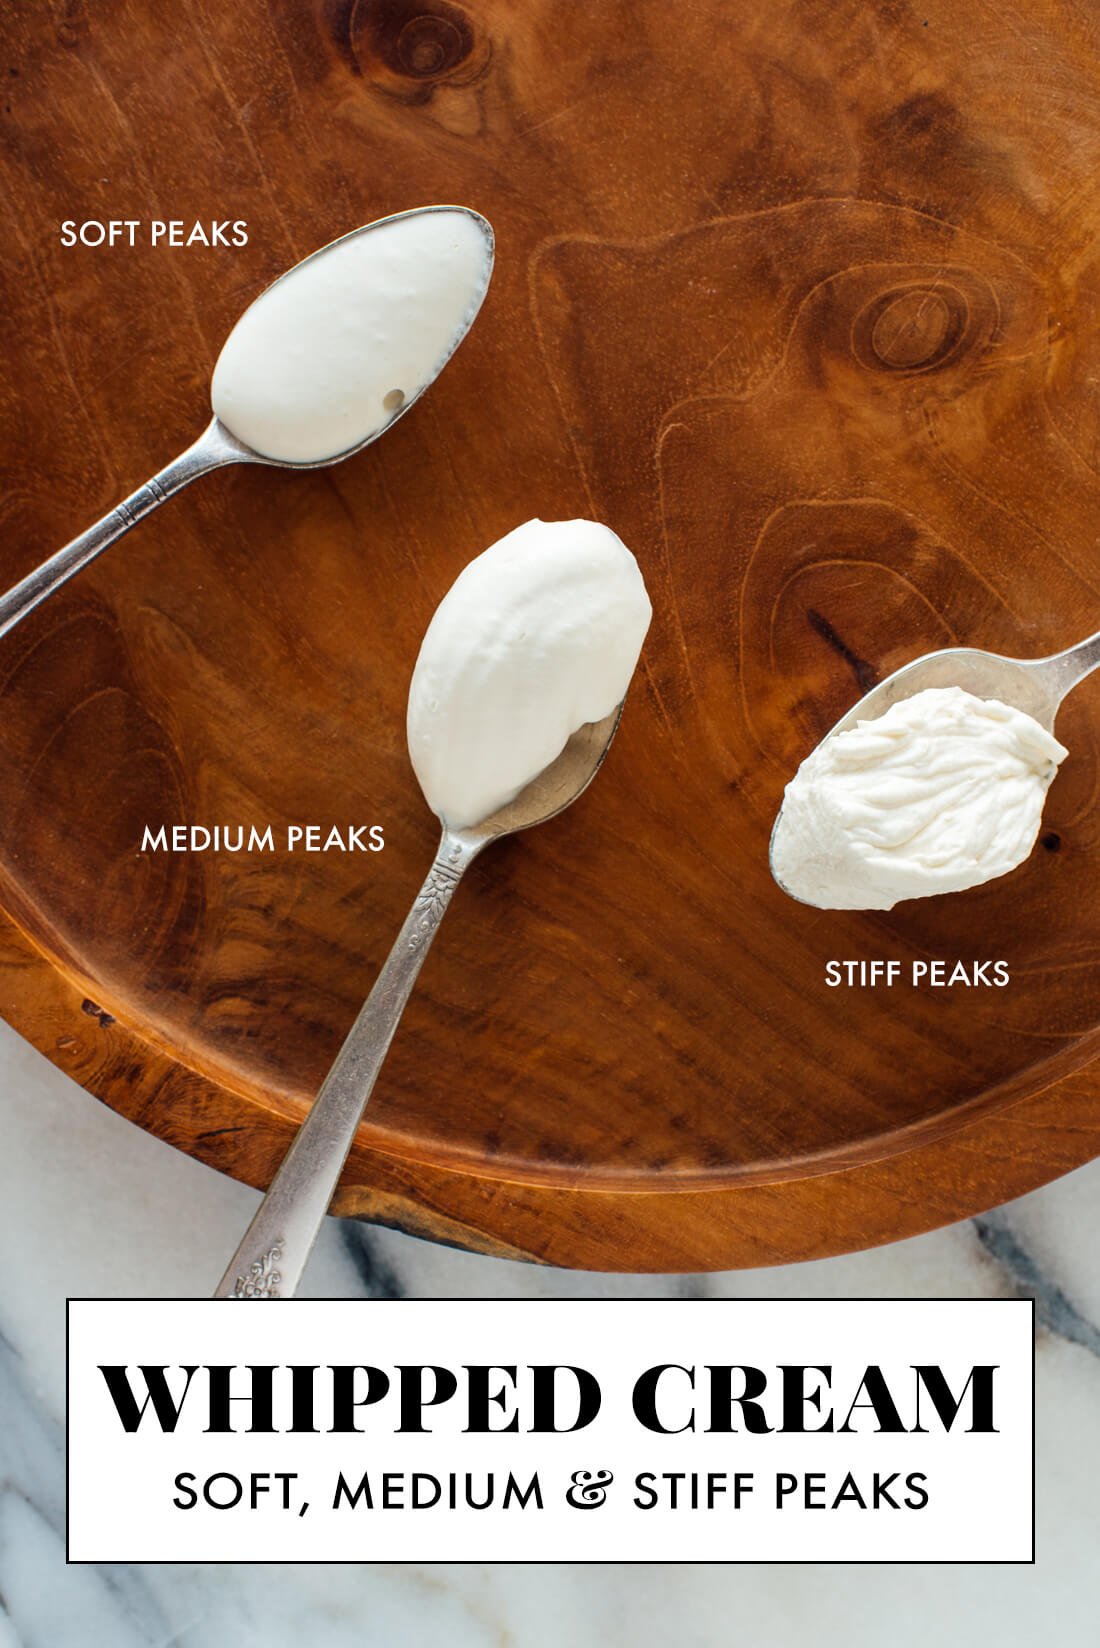 whipped cream examples of soft, medium and stiff peaks